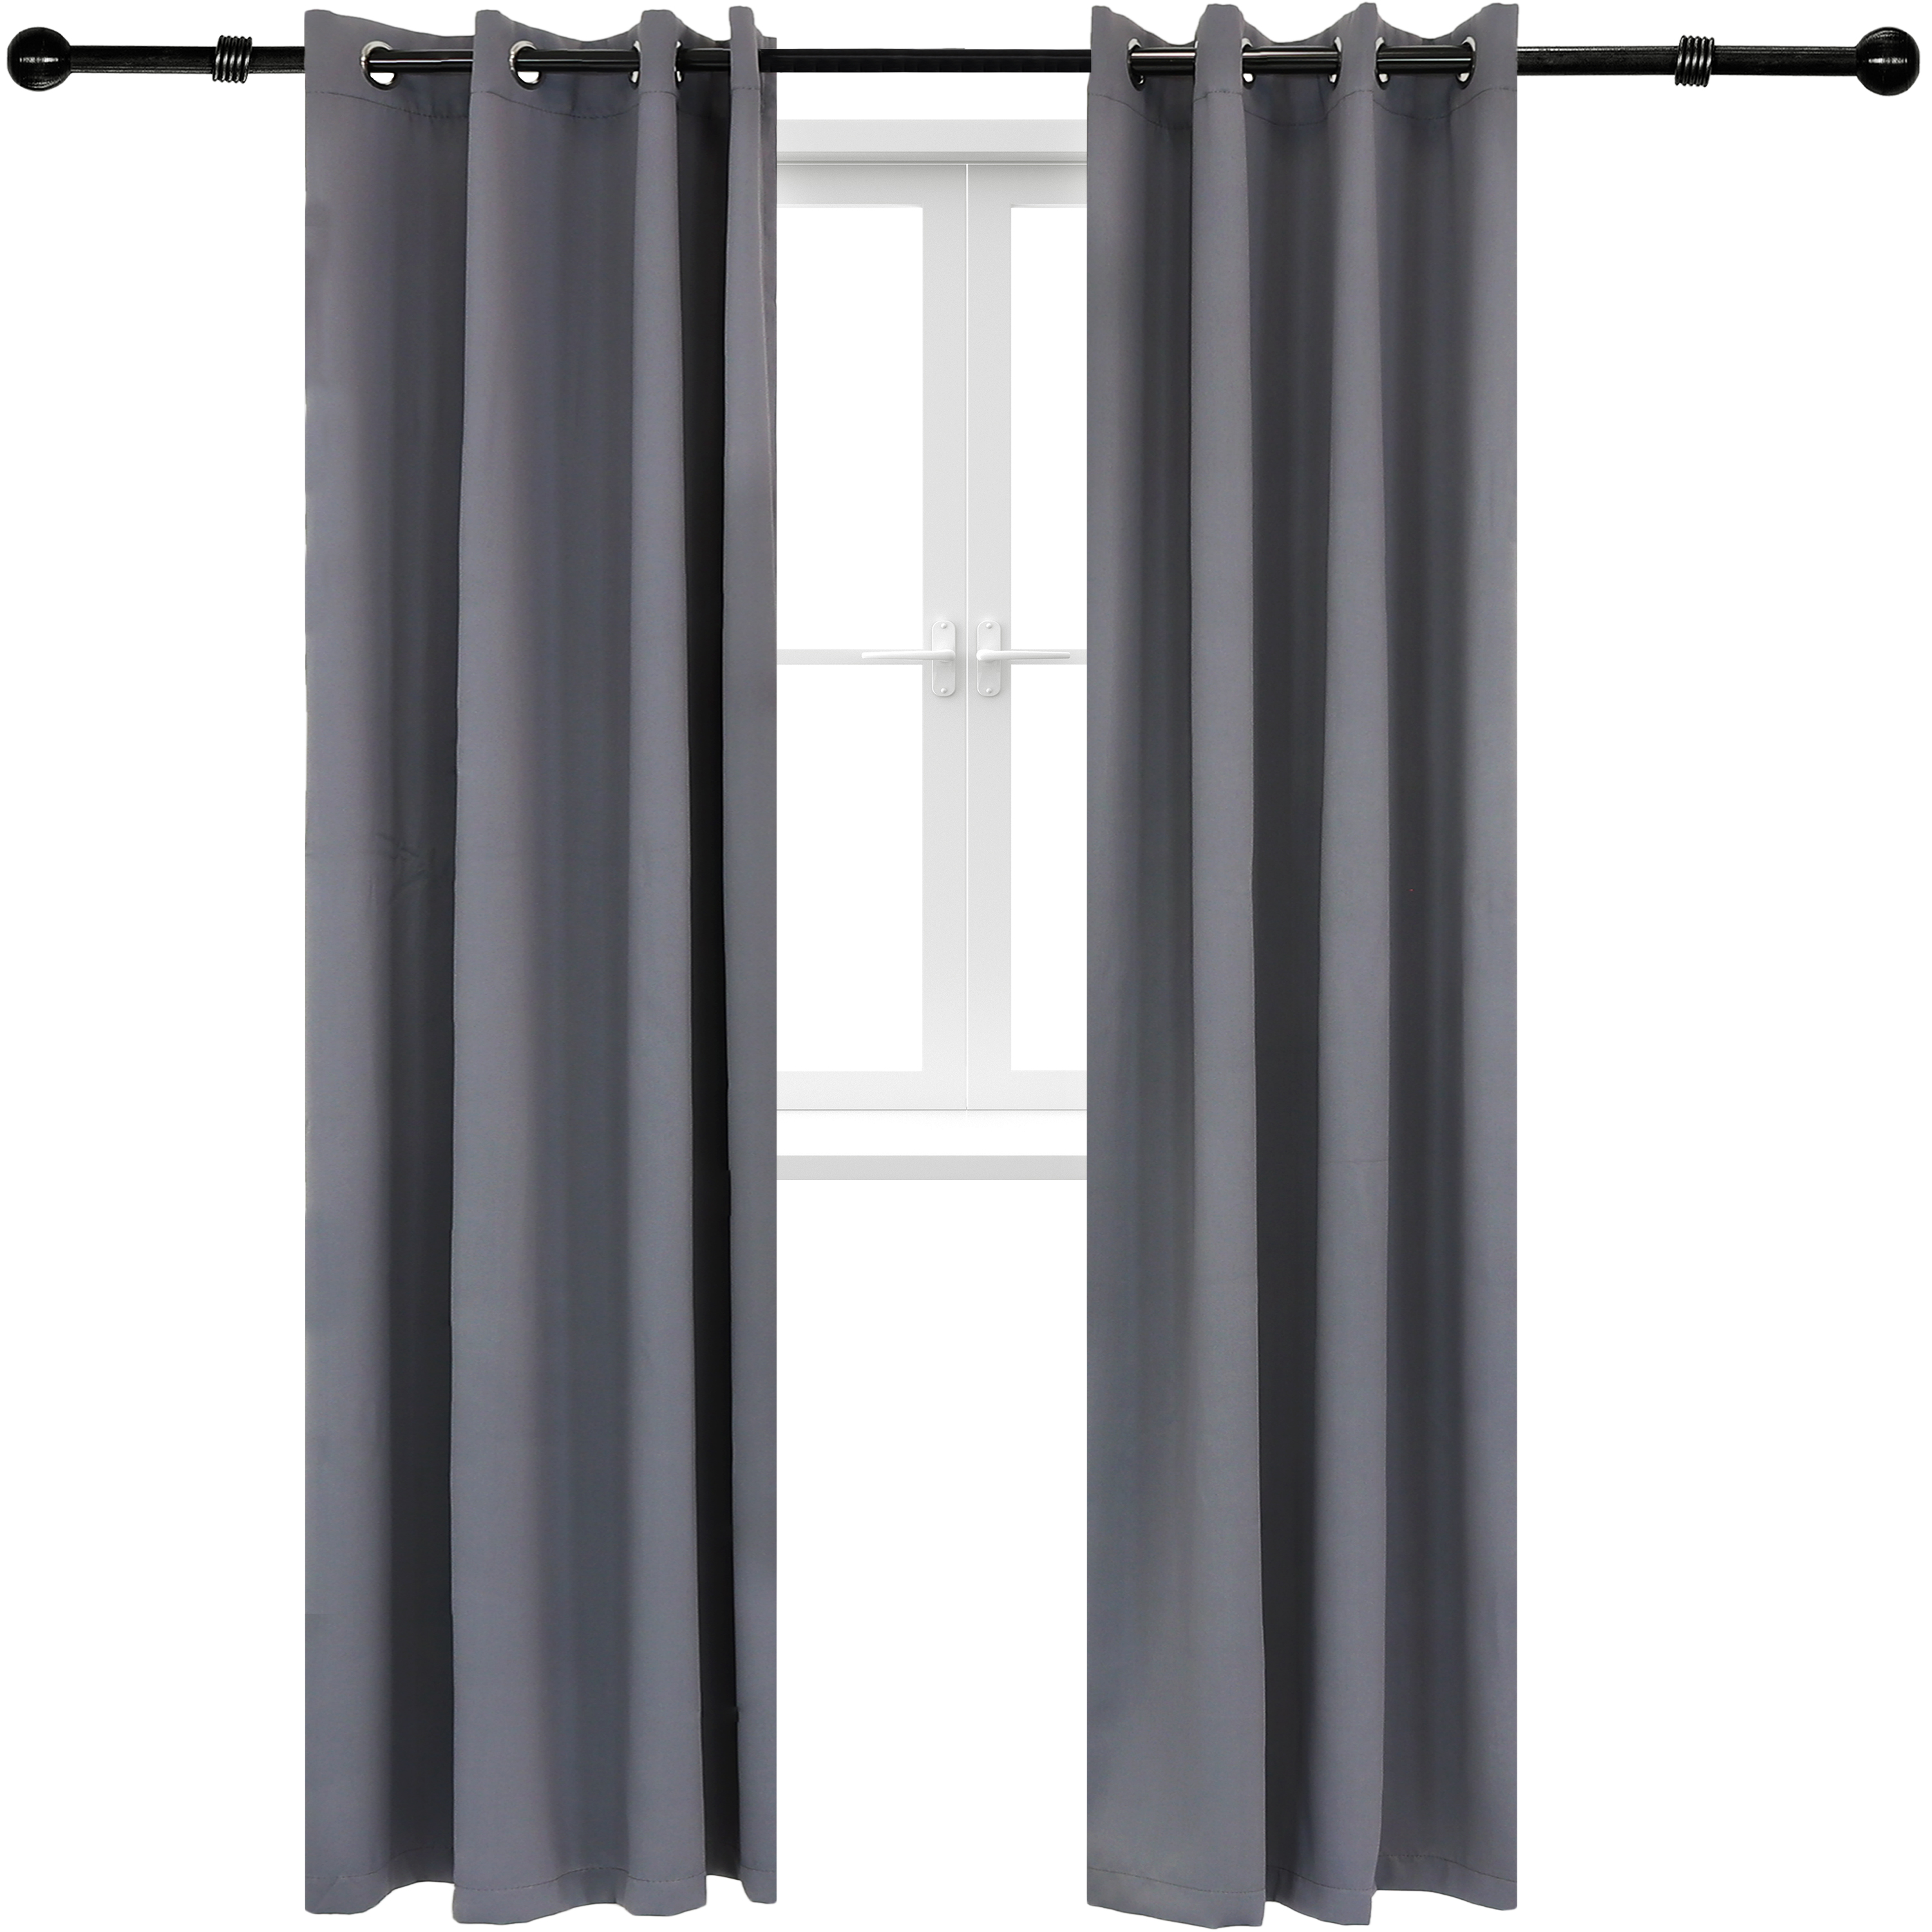 2 Indoor/Outdoor Blackout Curtain Panels with Grommet Top - 52 x 96 in (1.32 x 2.43 m) - Gray